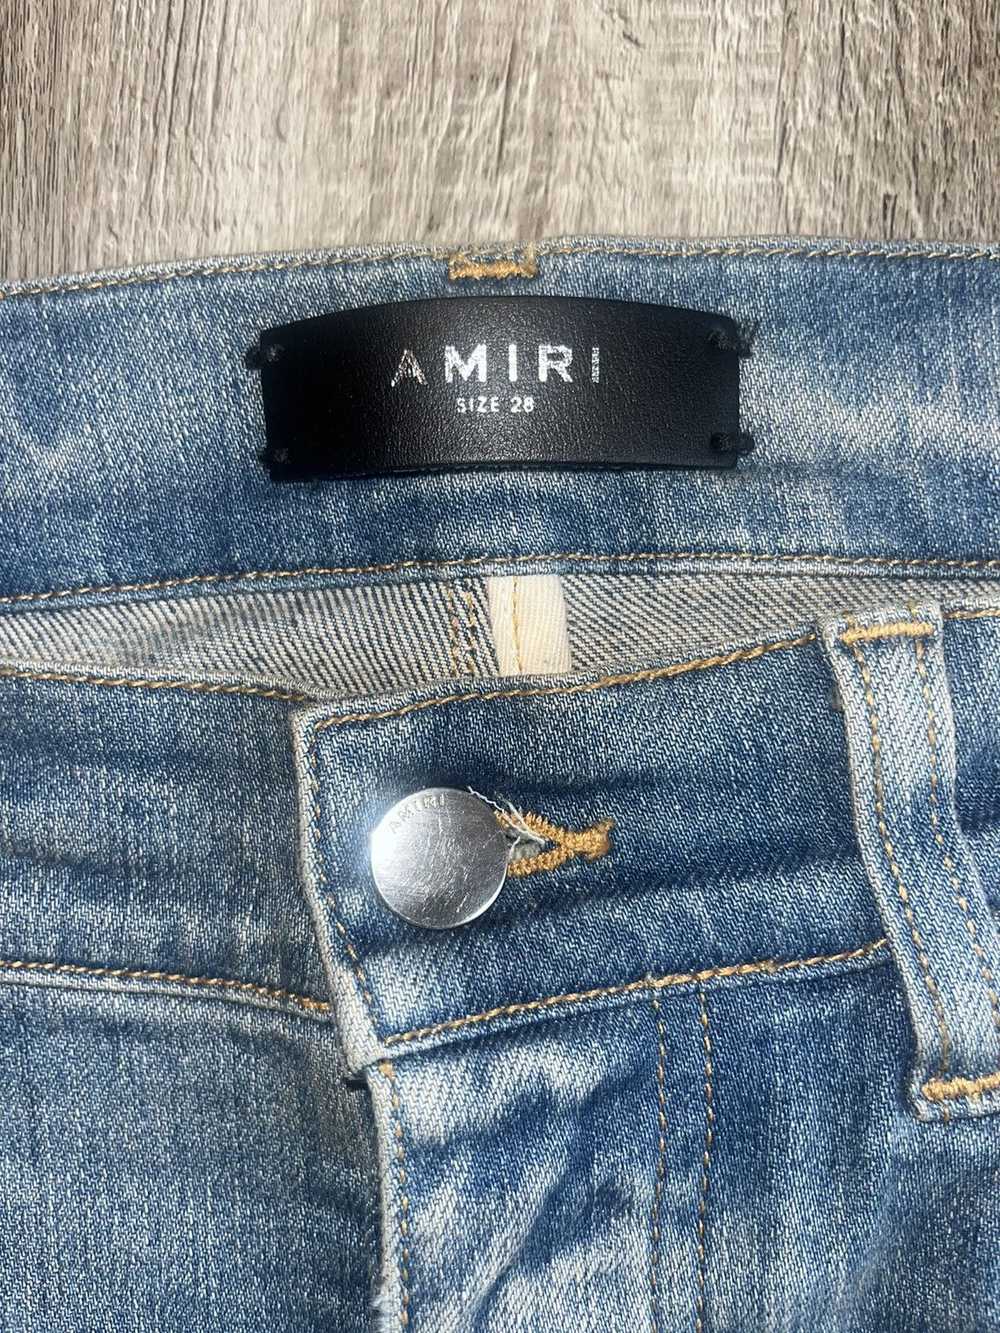 Amiri Amiri Black Leather Patch Jeans - image 4